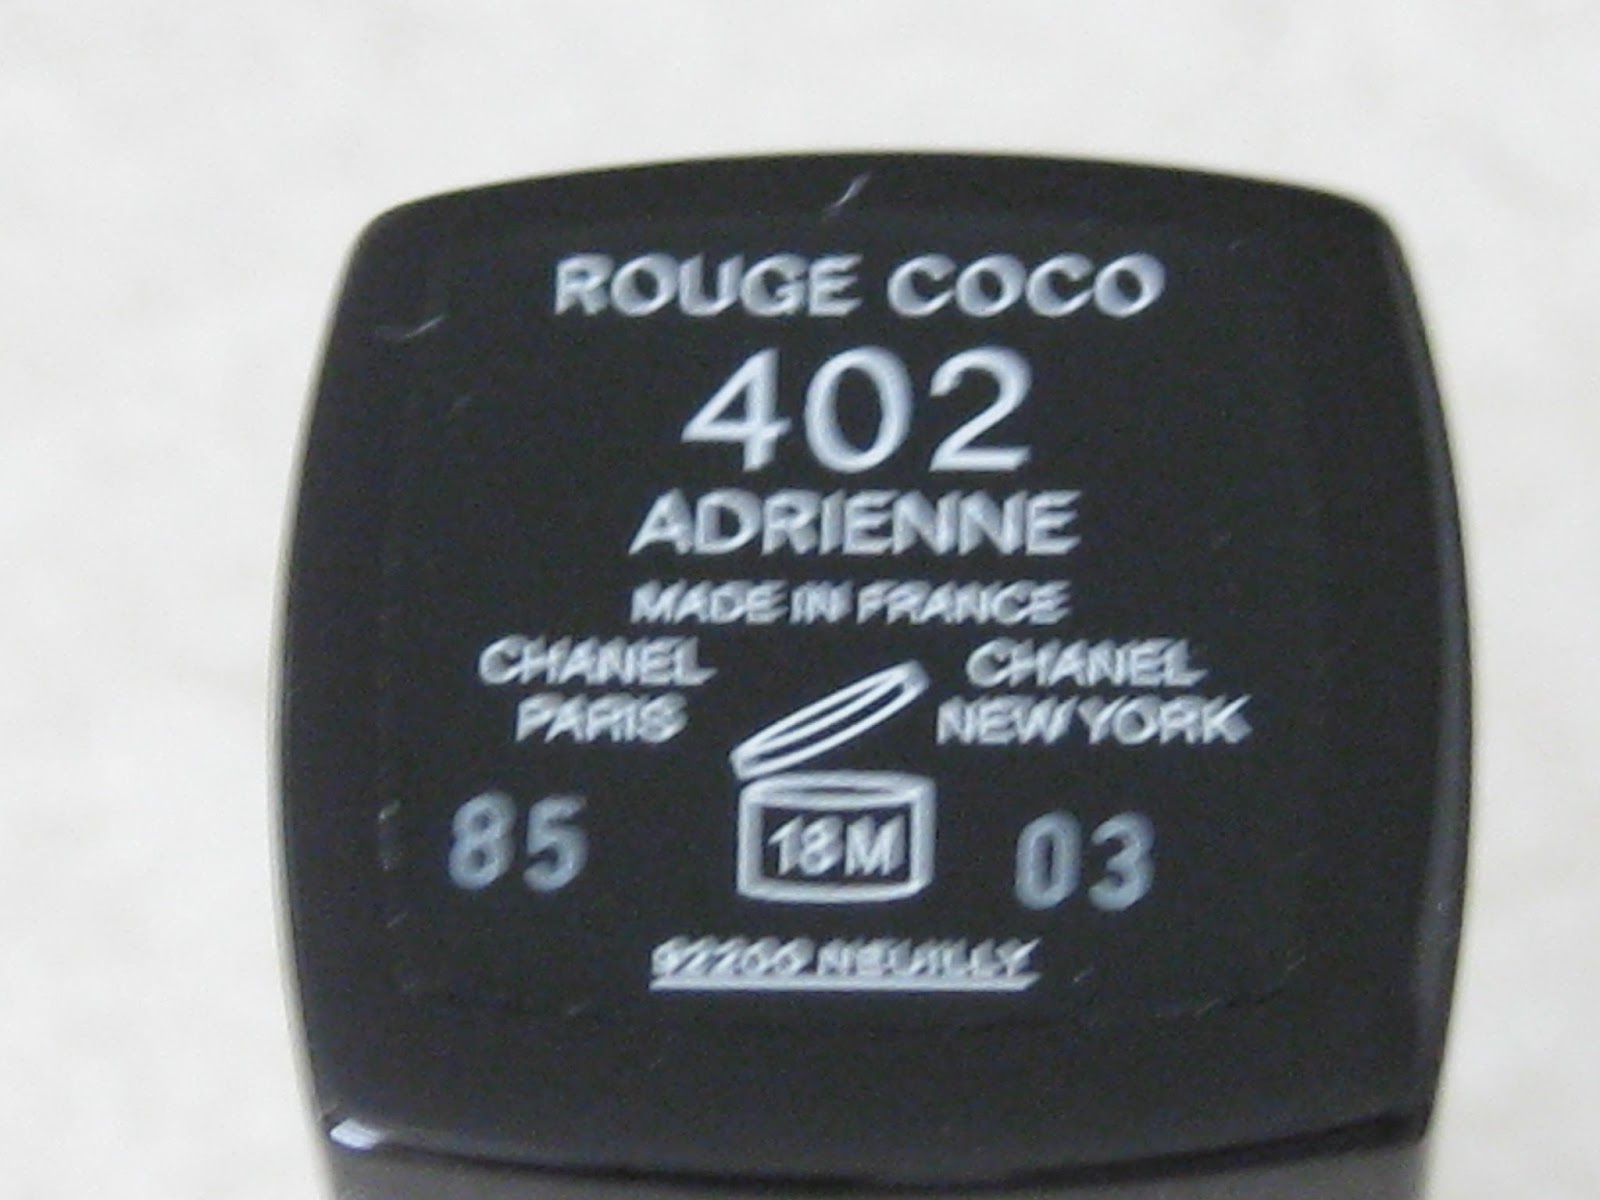 Chanel Rouge Coco Lip Colour Adrienne 402